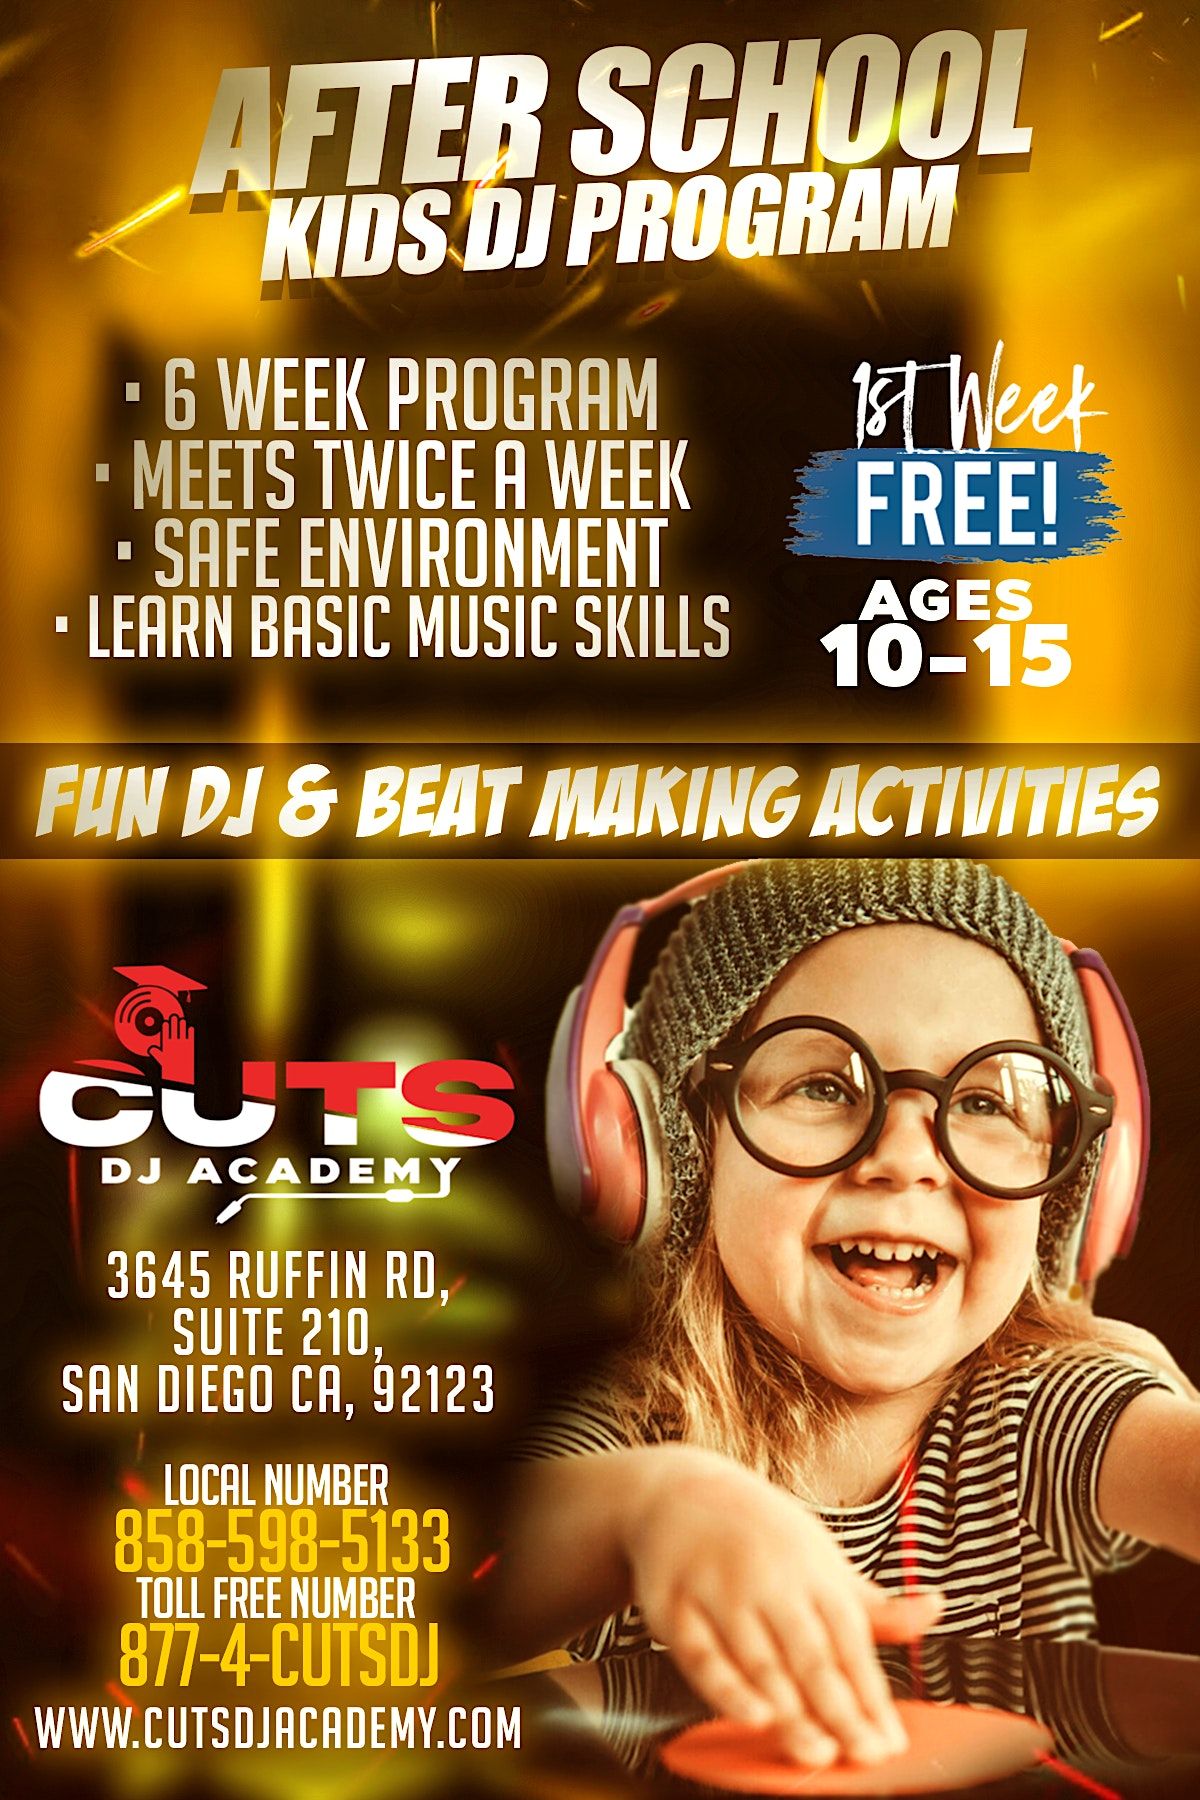 San Diego Free After School Kids DJ Program